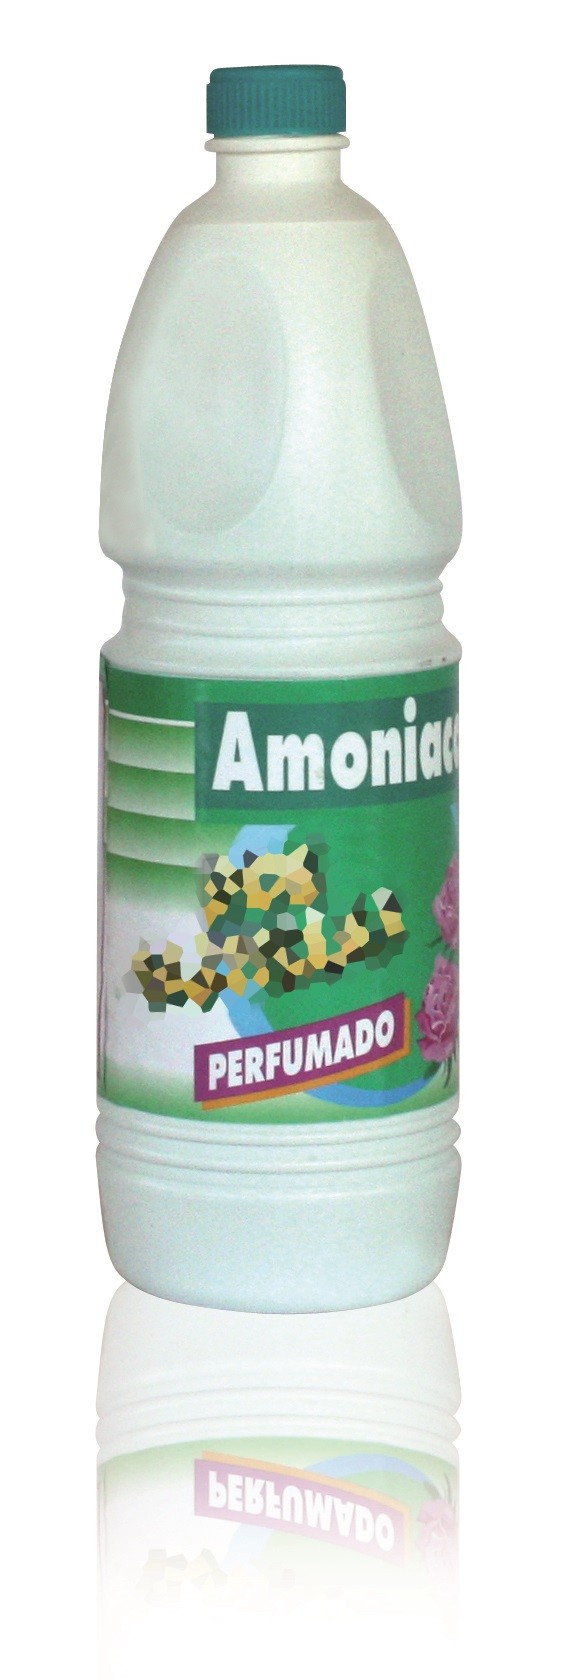 Amoníaco perfumado